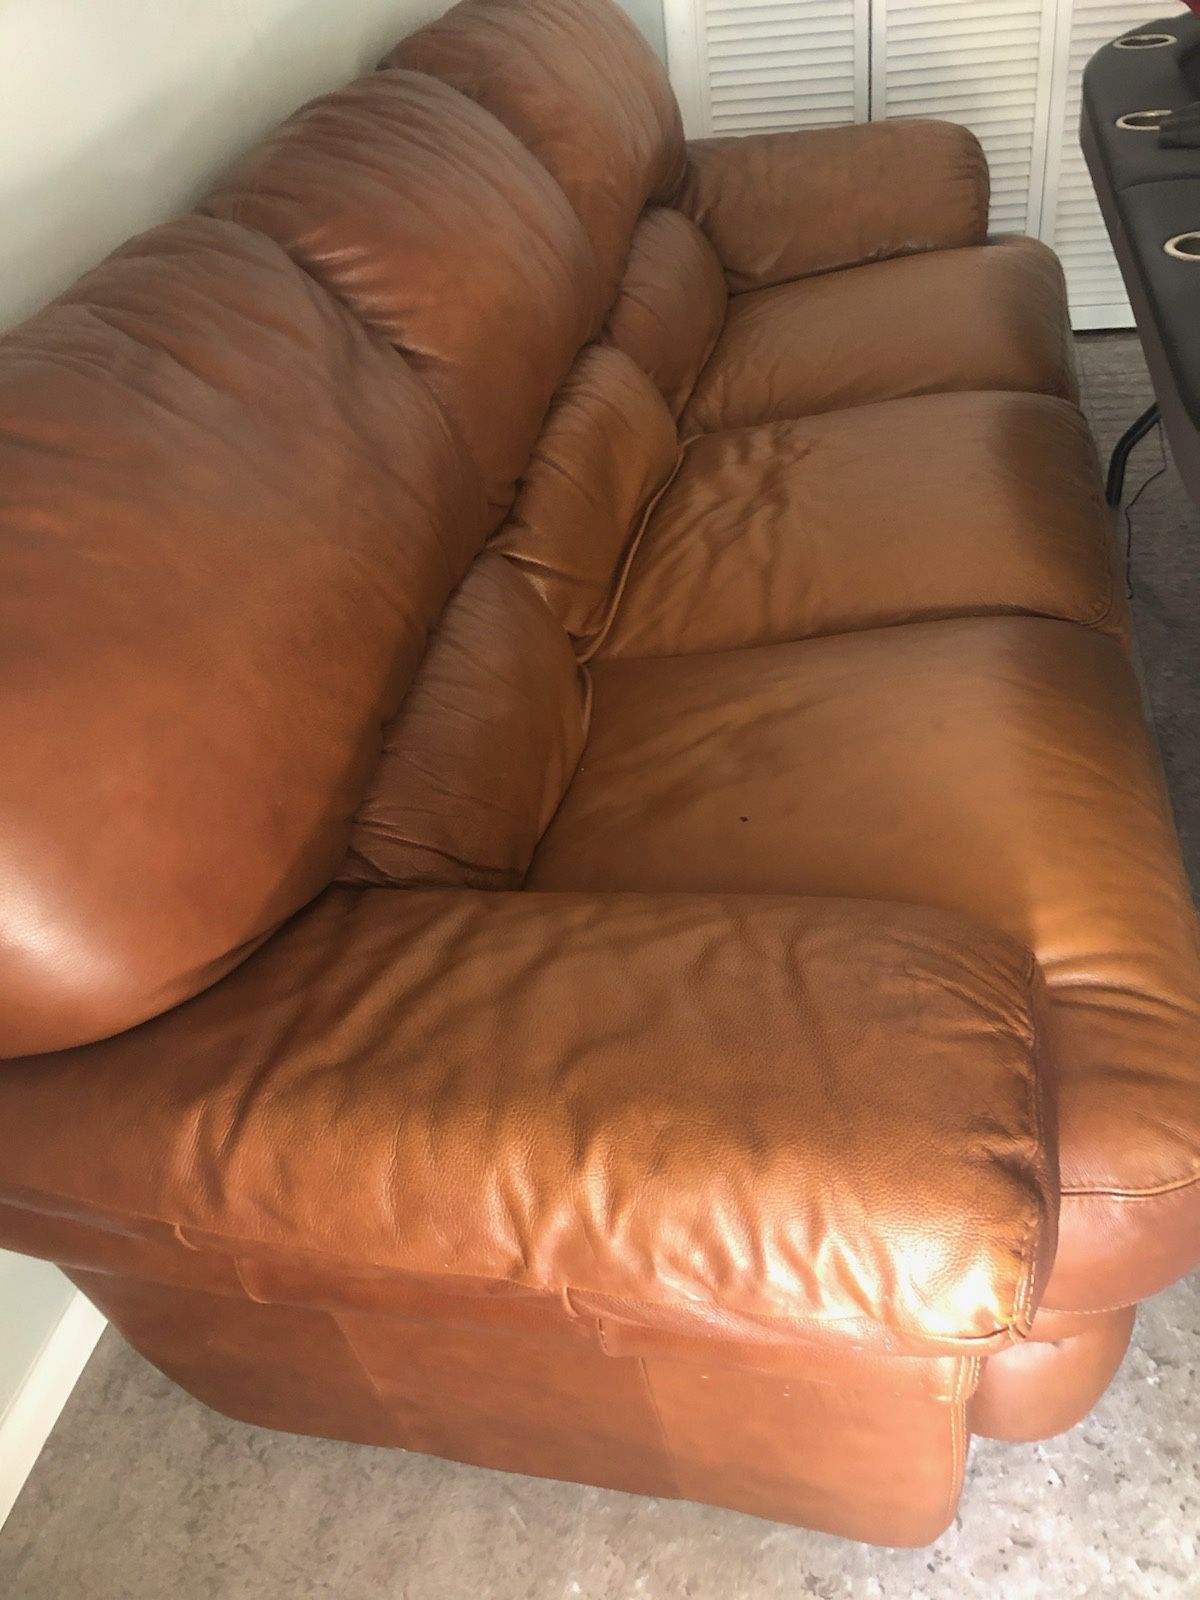 Leather Sofa - Chair & Ottoman!